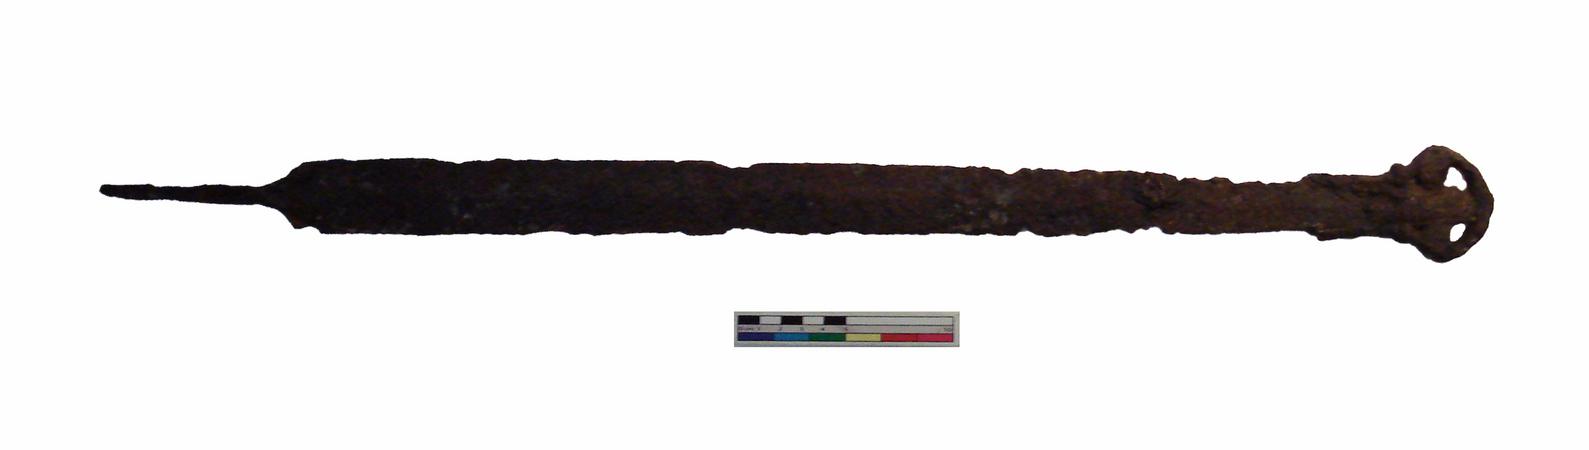 sword; sheath | British Museum